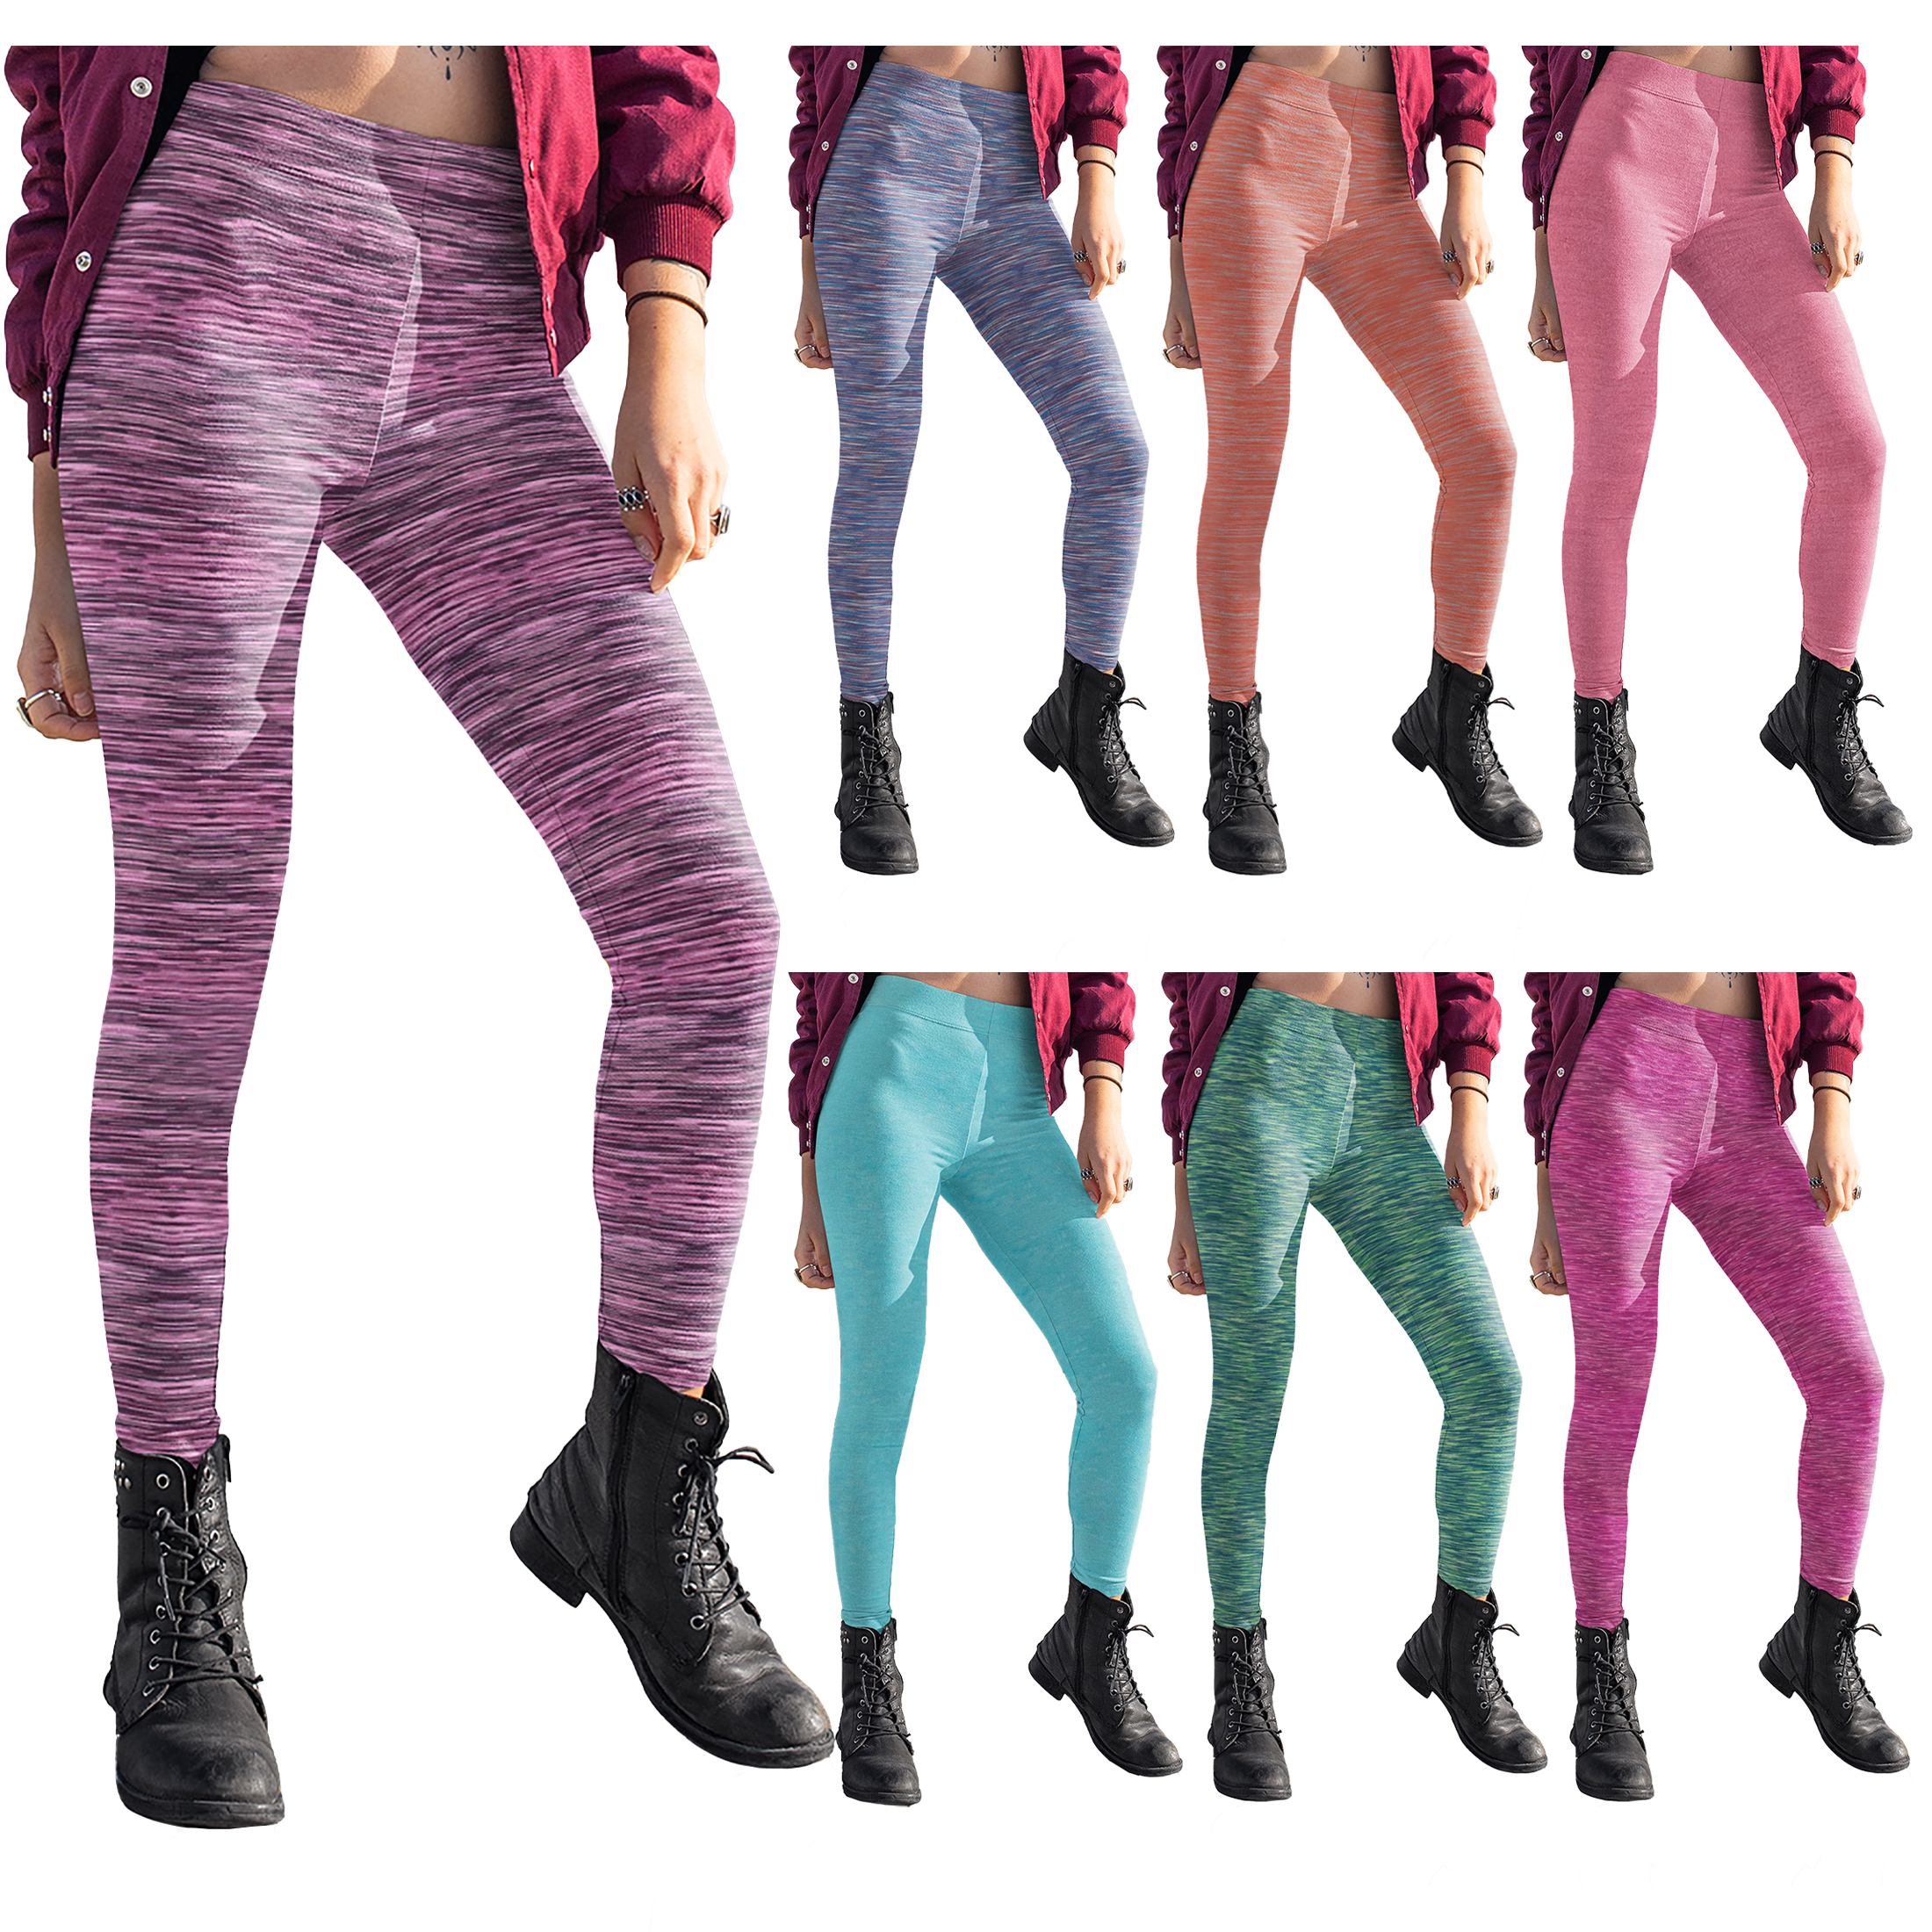 2-Pack: Women's Space Dye Seamless Leggings - Small